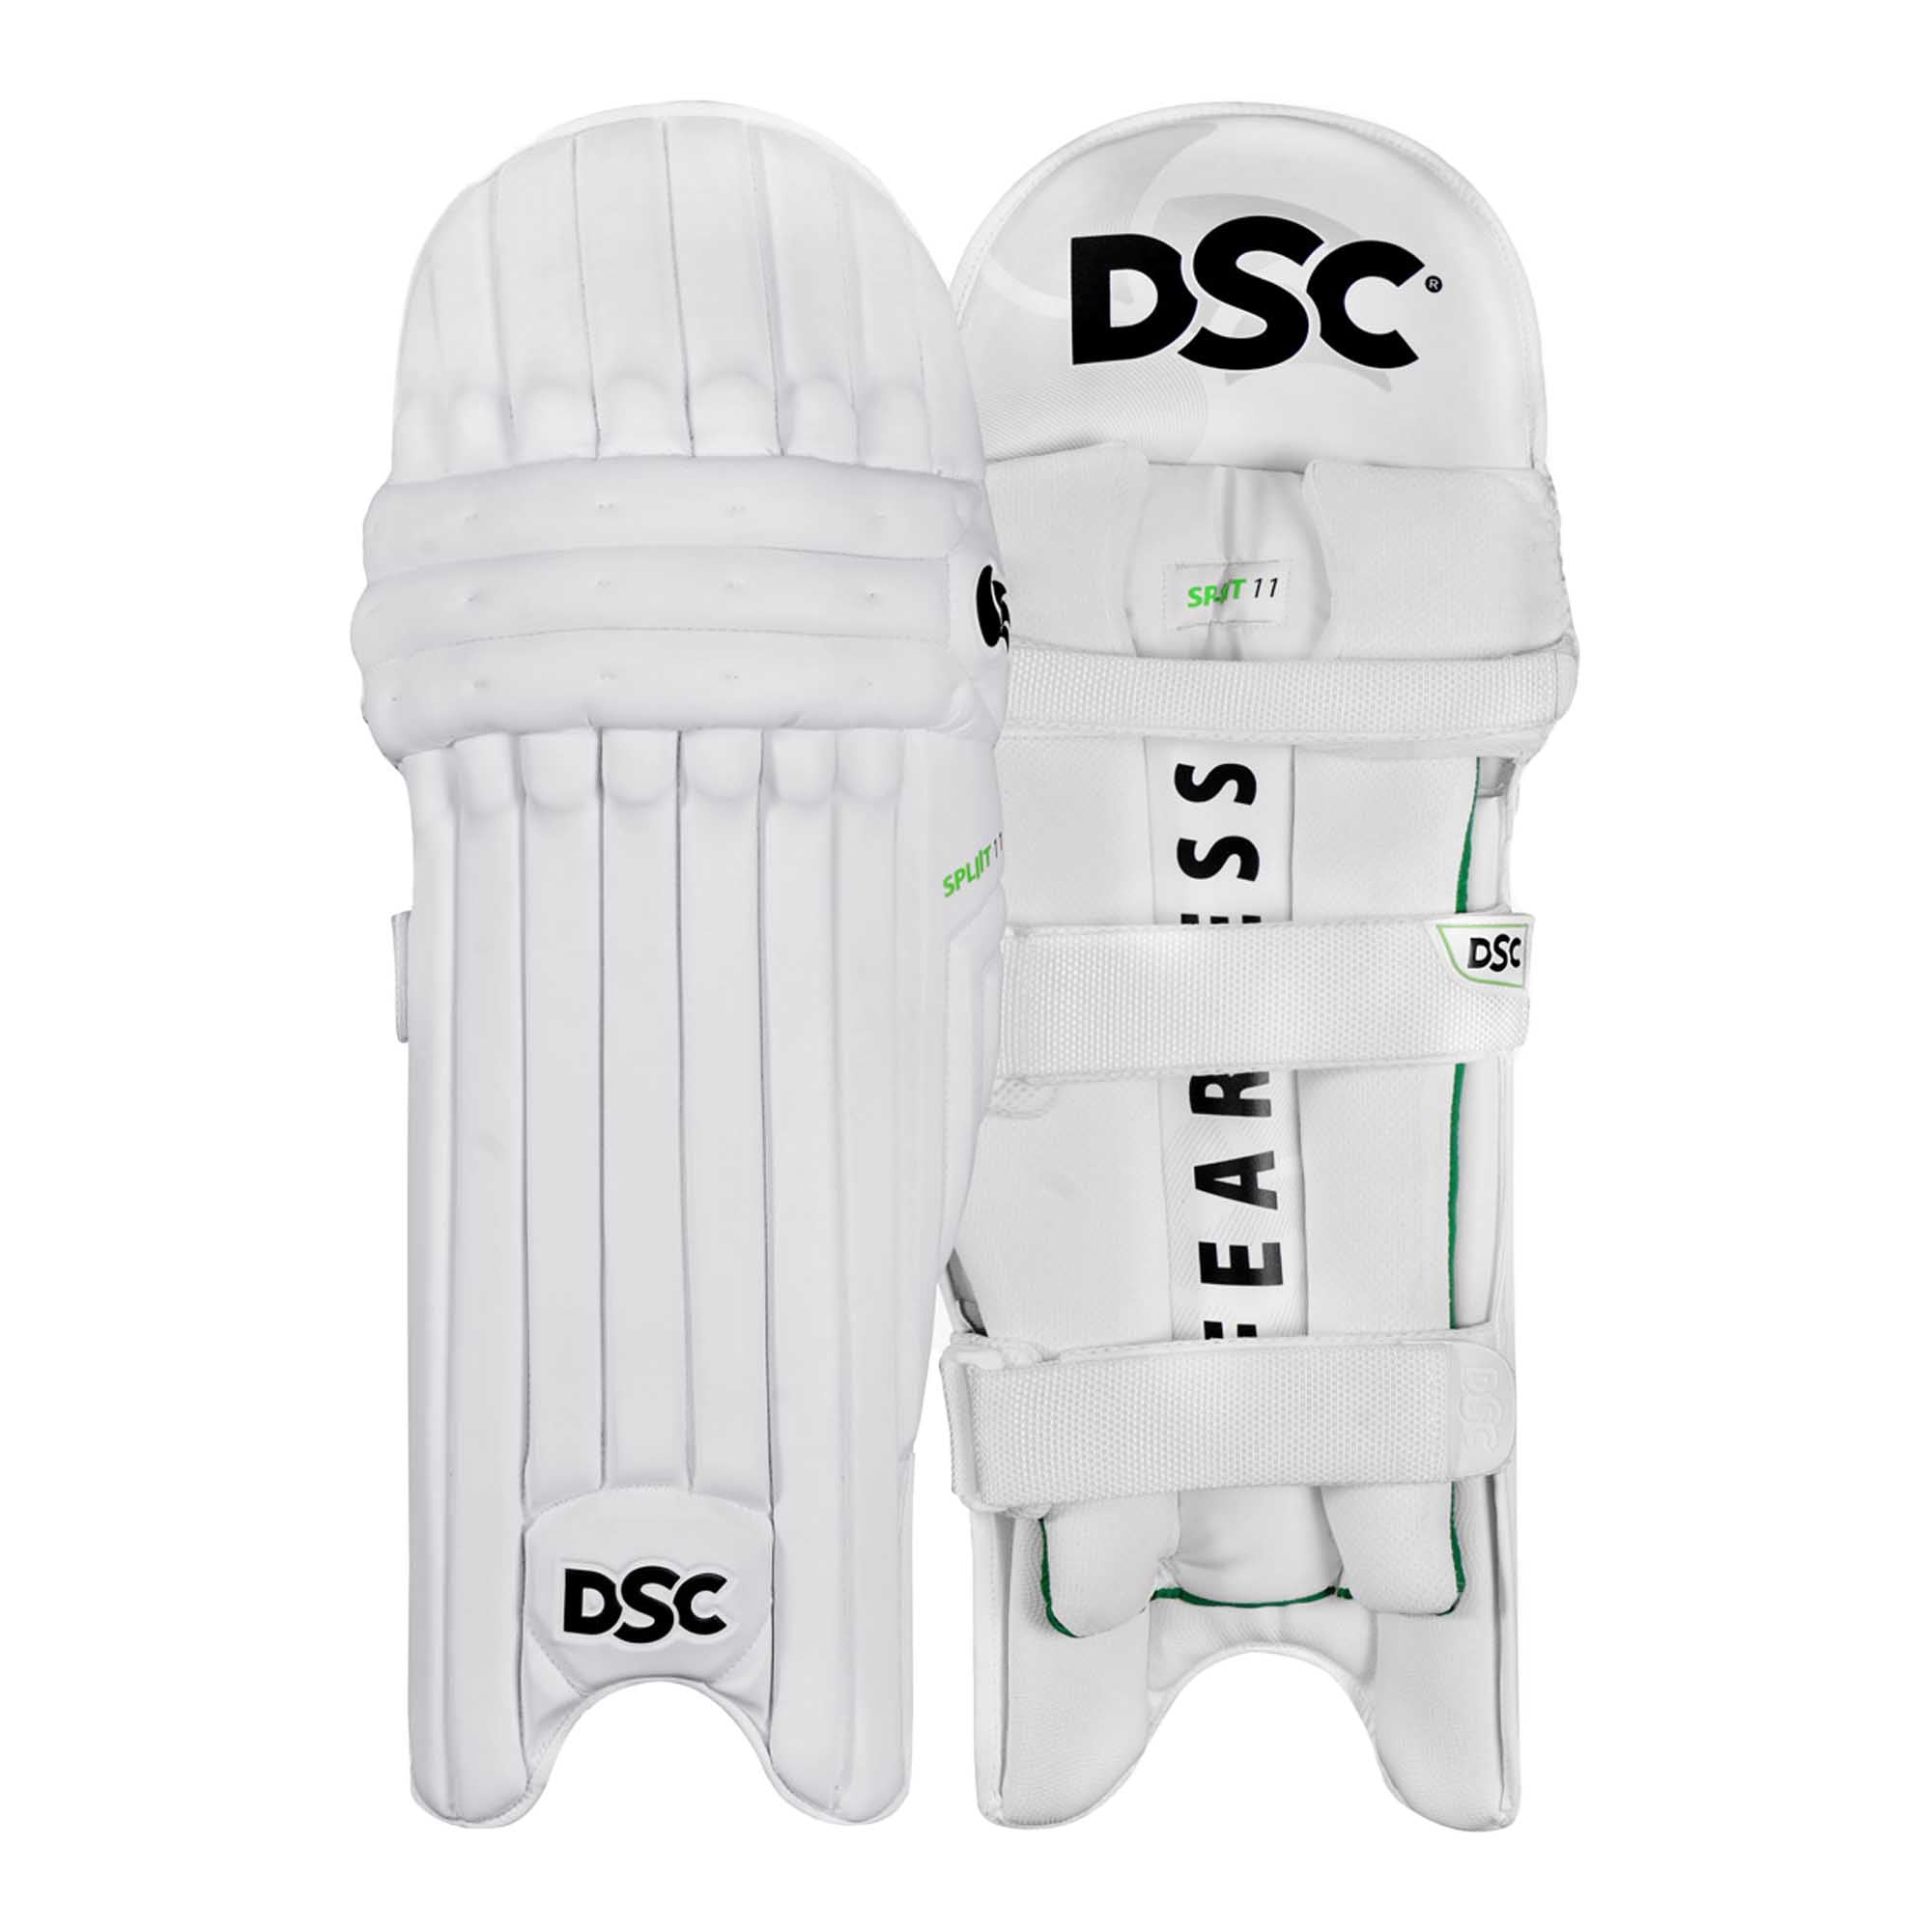 DSC Split 11 Senior Cricket Batting Pads